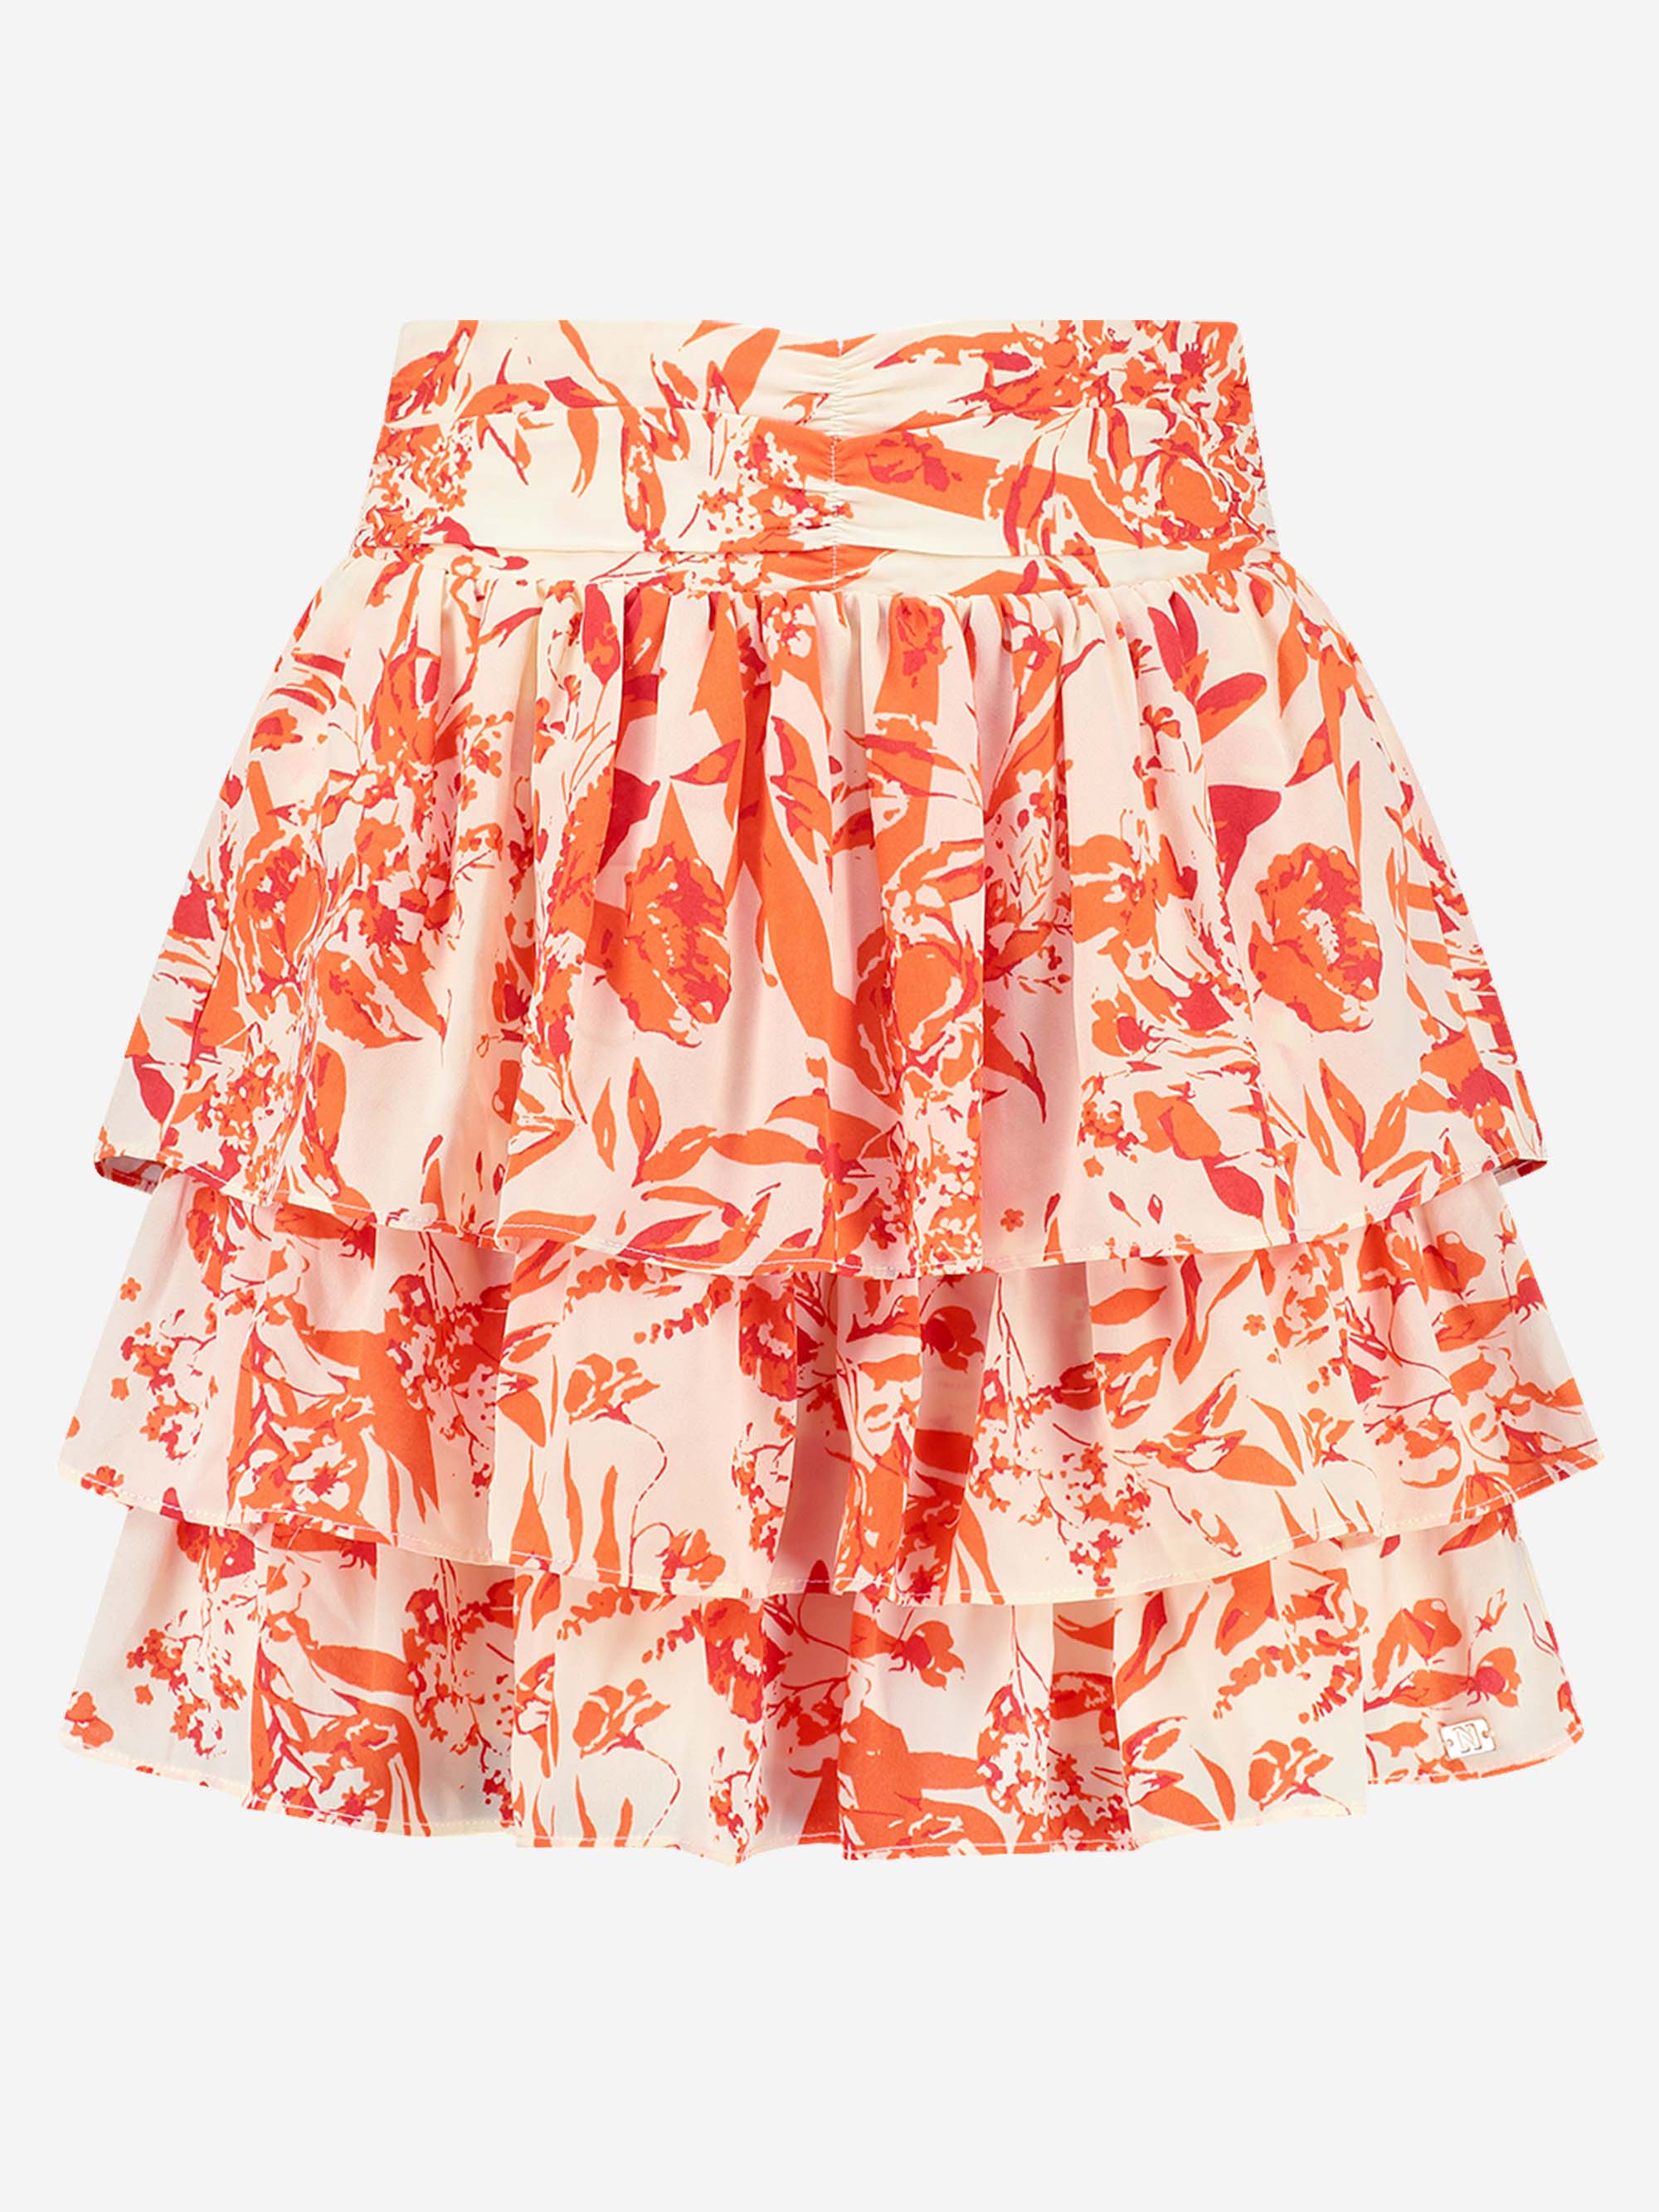  Layered skirt with elastic waistband